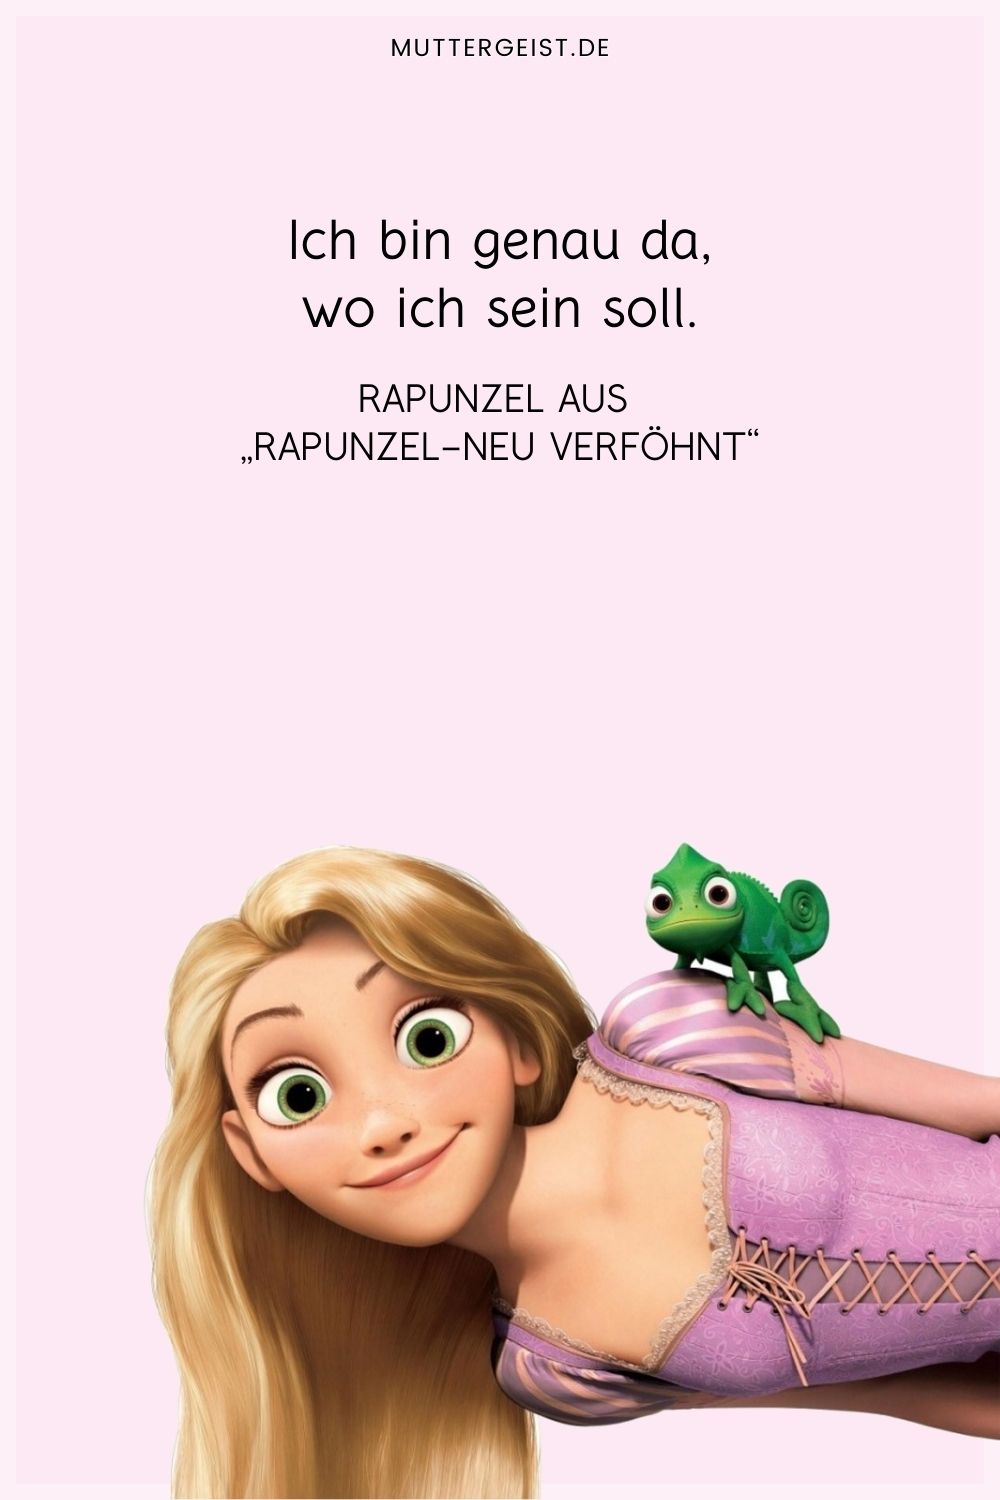 Zitat aus Disneys Rapunzel als Geburtstagswunsch